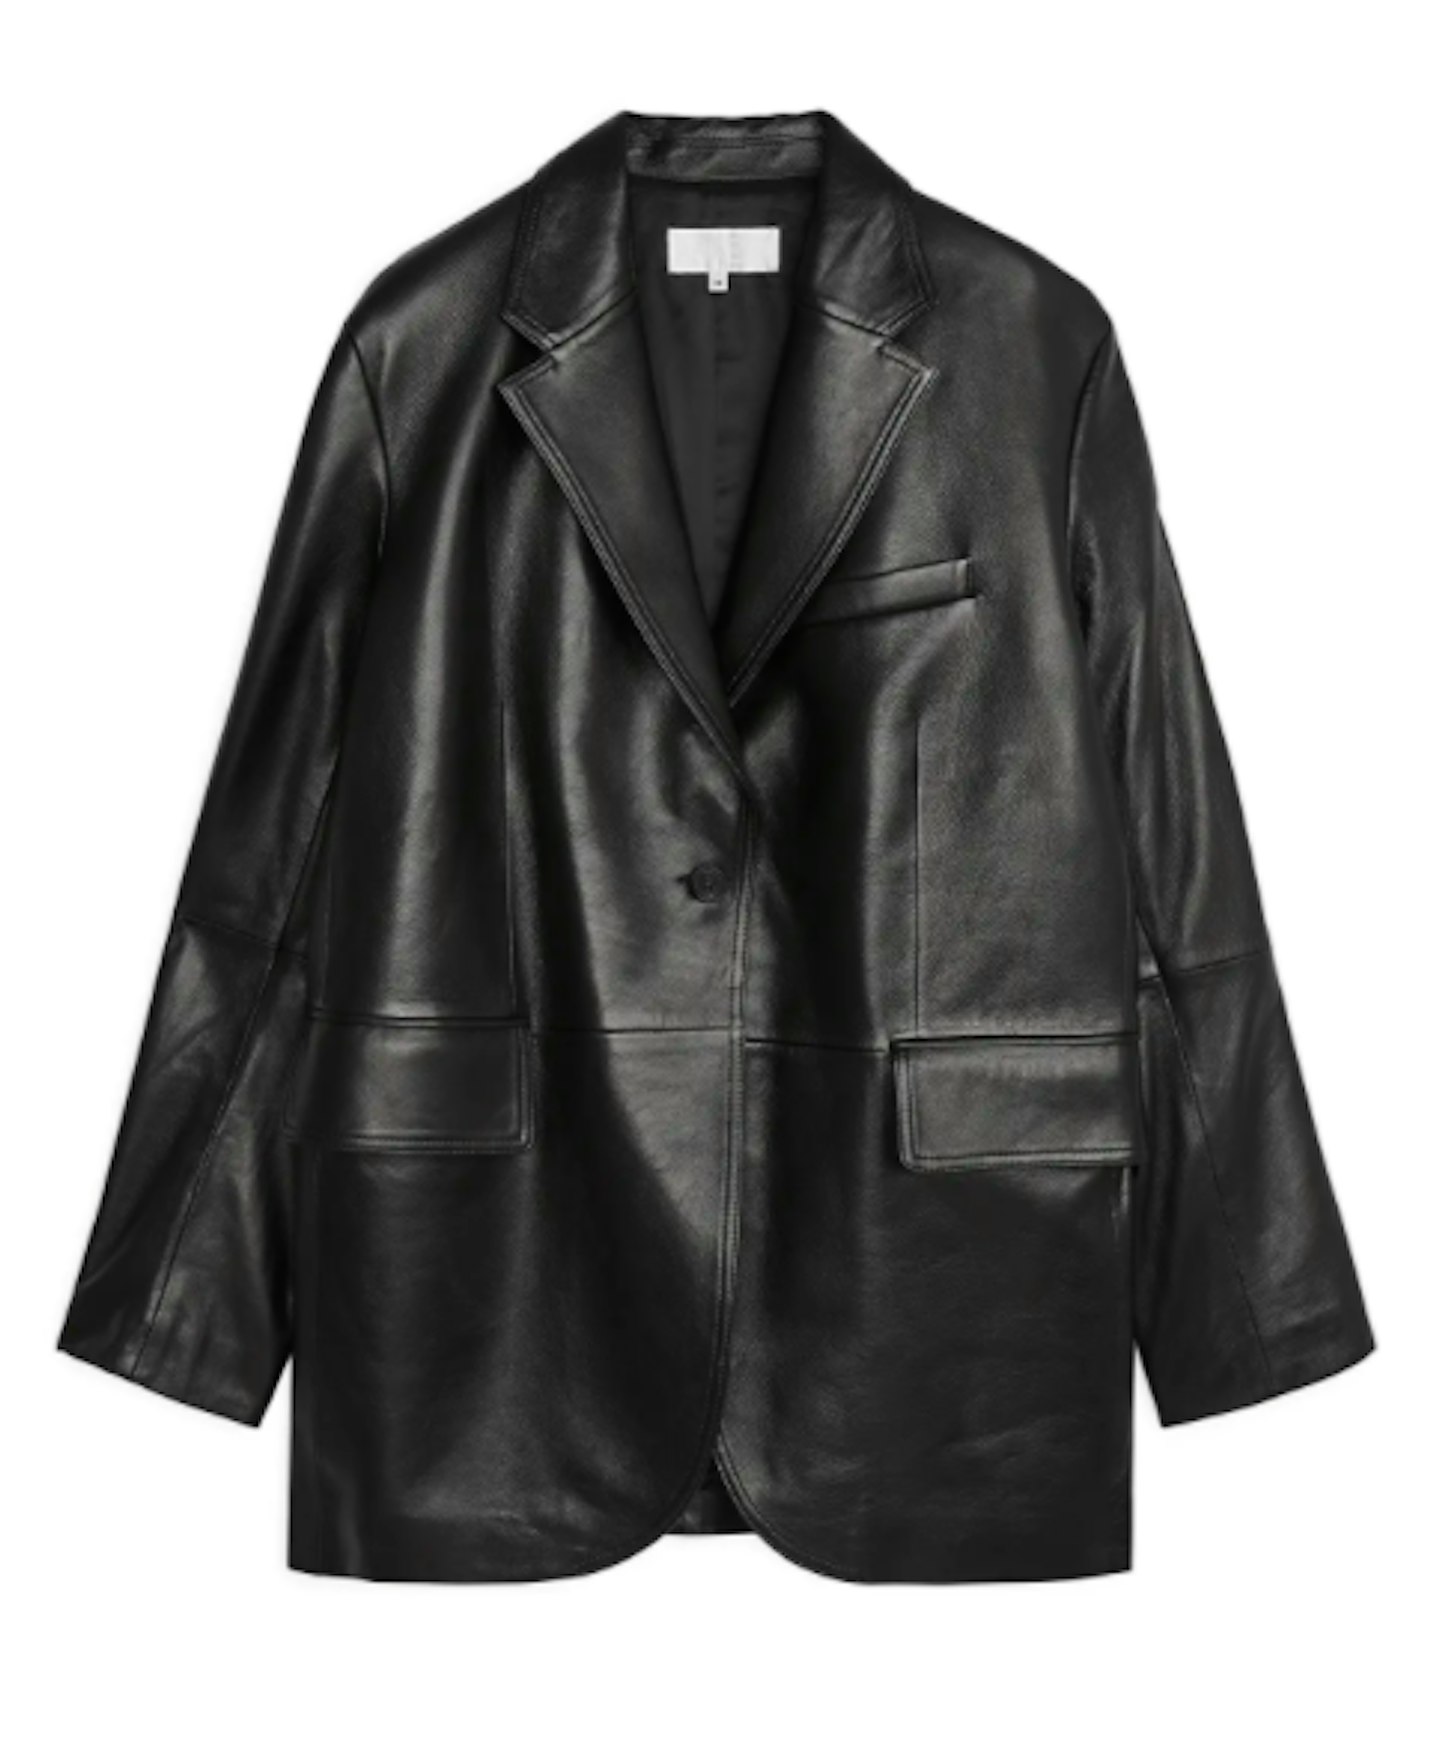 Scorpio - Arket, Oversized Leather Blazer, £290